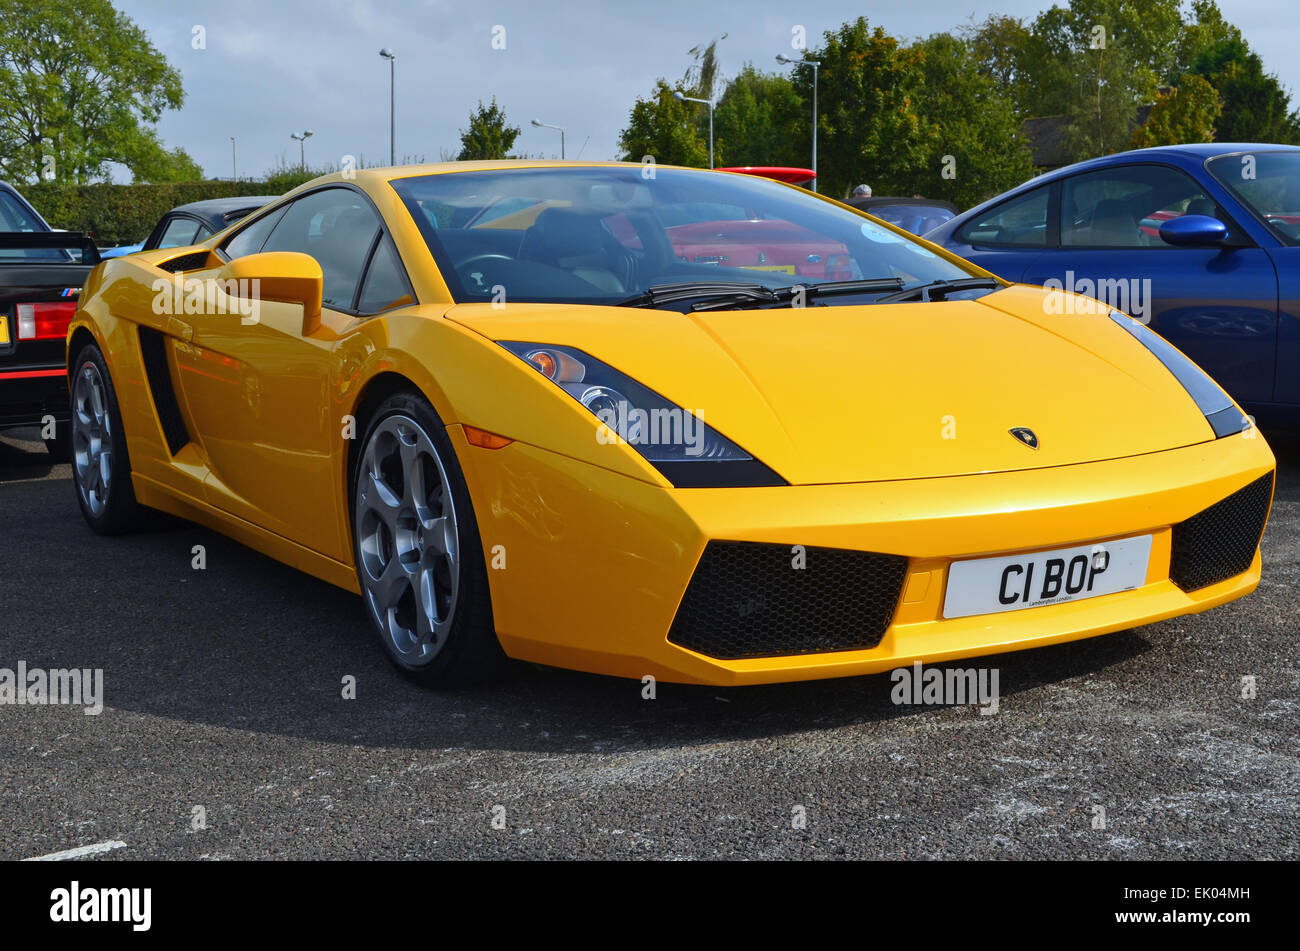 Yellow Lamborghini Gallardo Stock Photo: 80523649 - Alamy